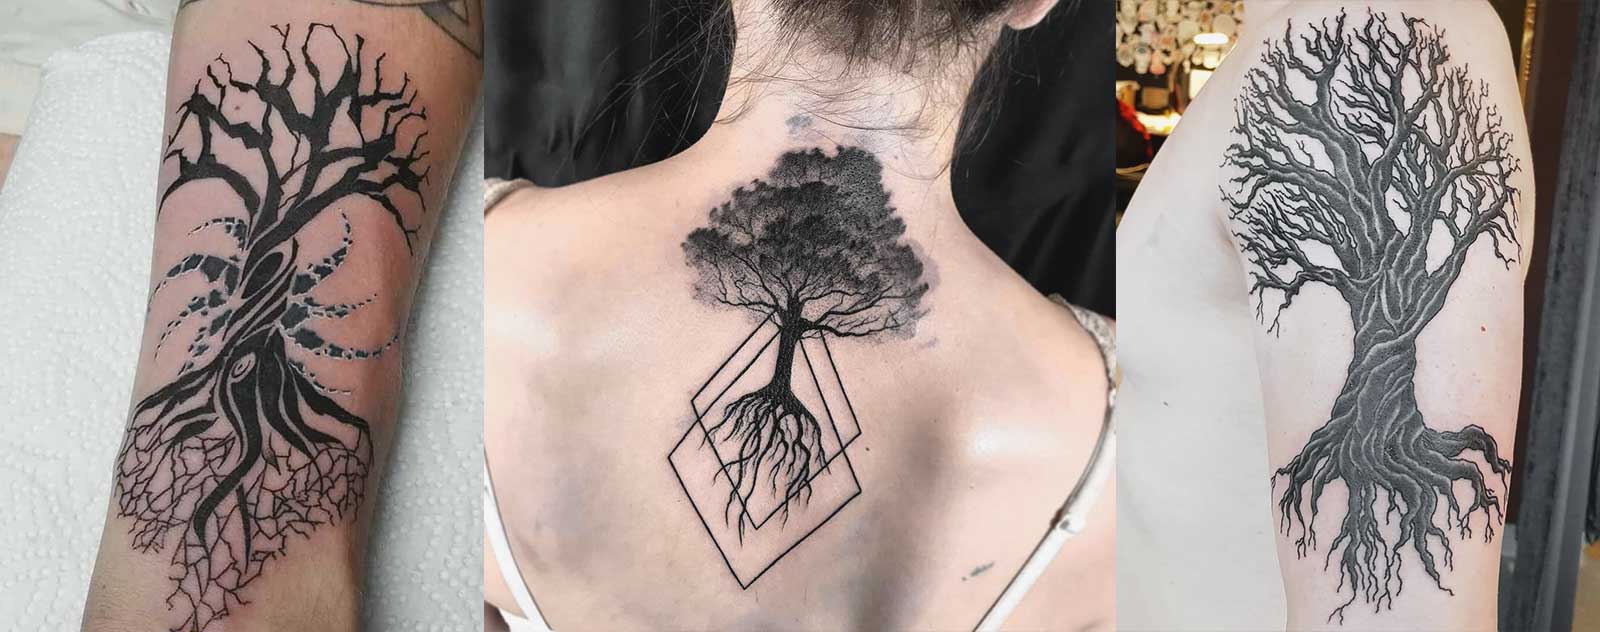 Tree of life tattoos